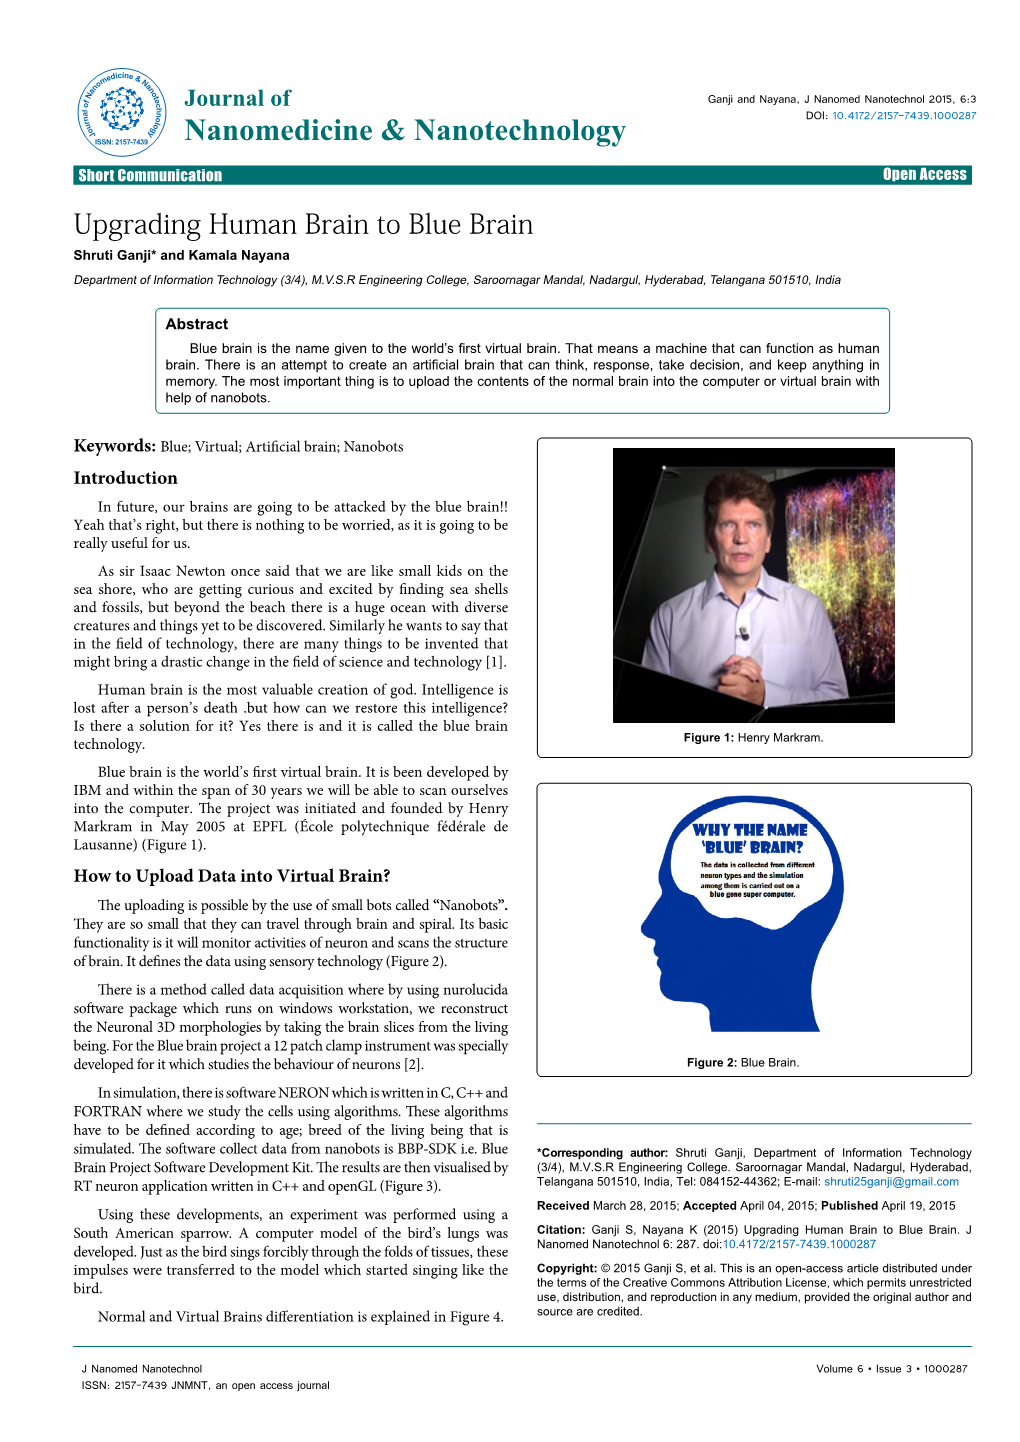 Upgrading Human Brain to Blue Brain